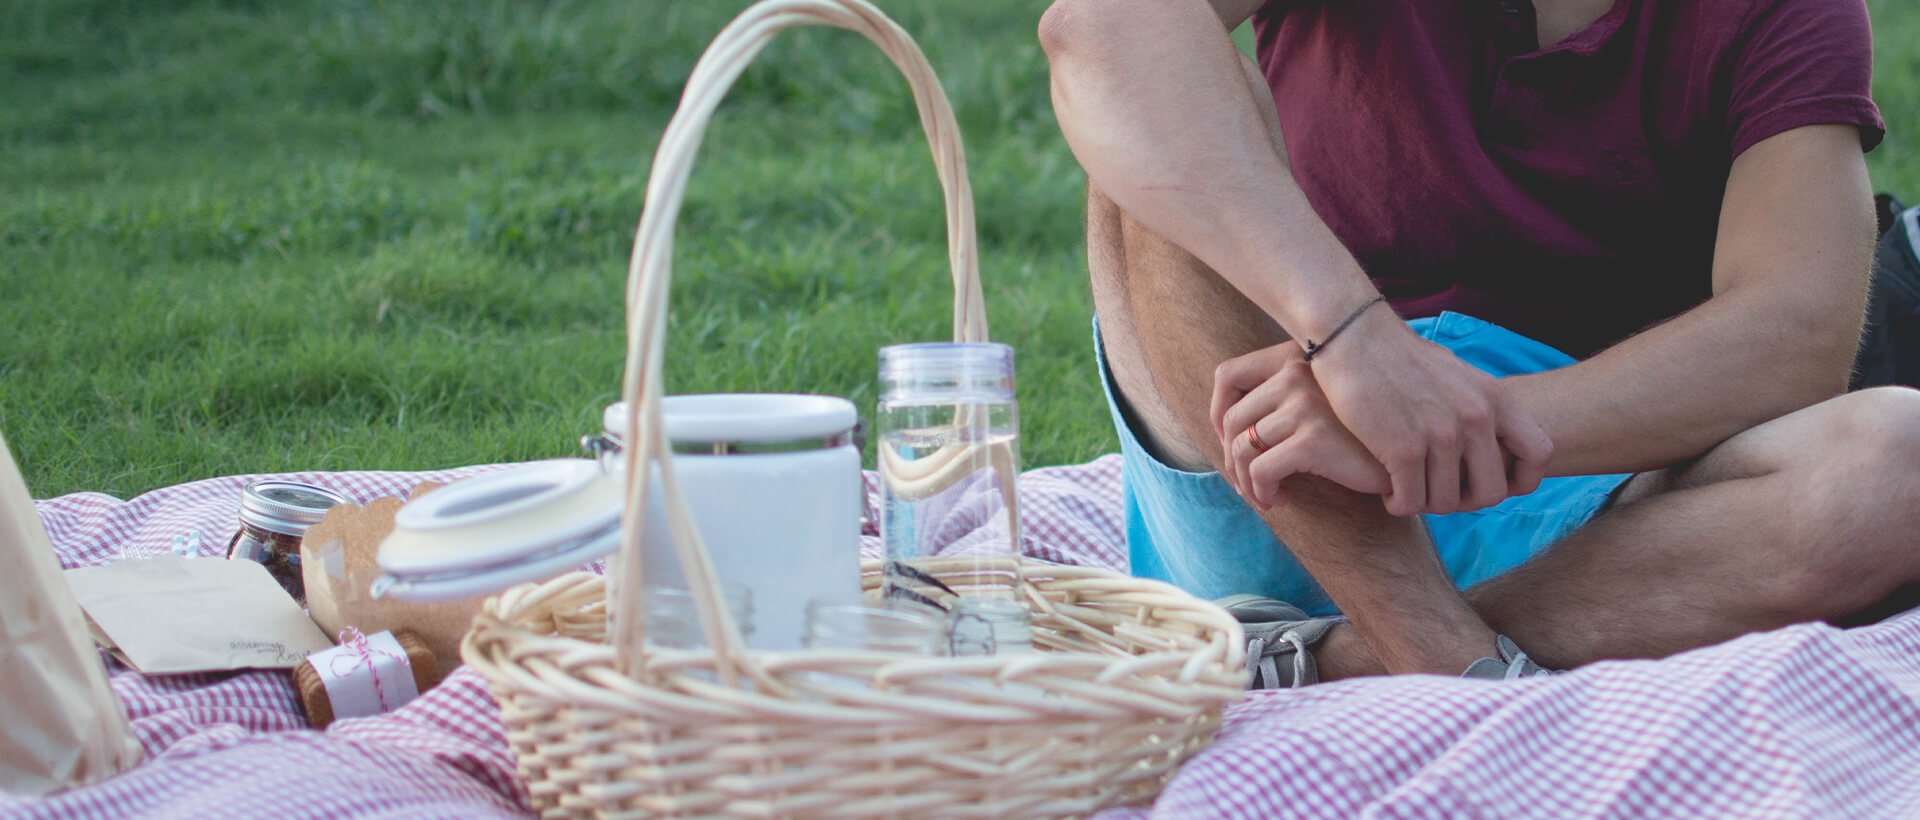 a man sitting on a blanket next to a picnic basket.